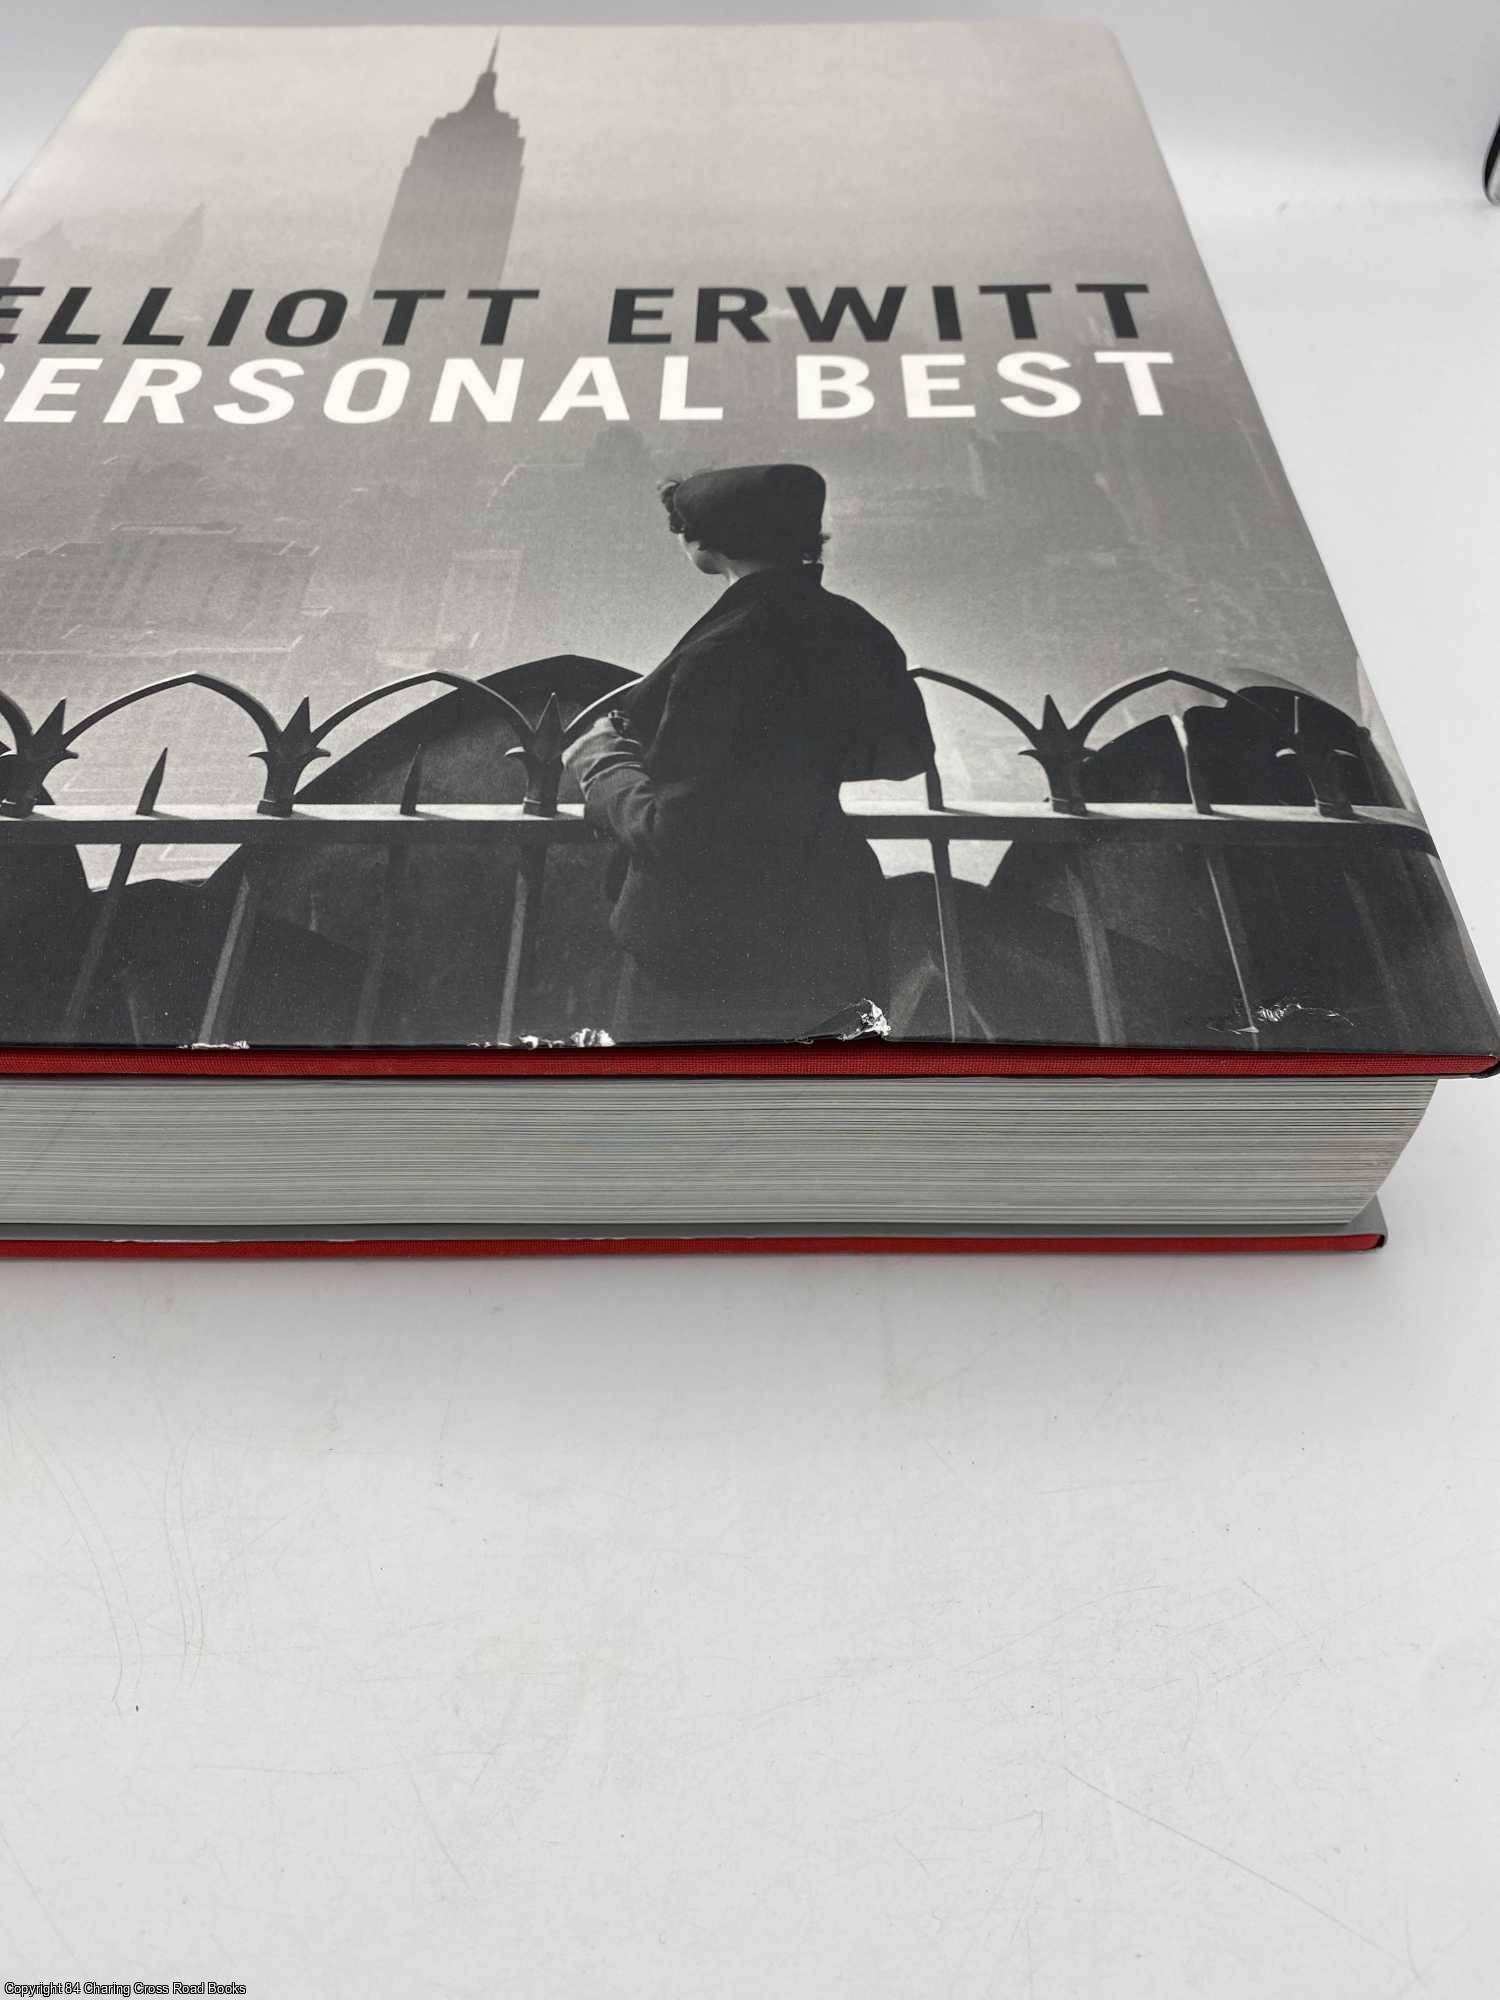 Personal Best | Elliott Erwitt | First Edition